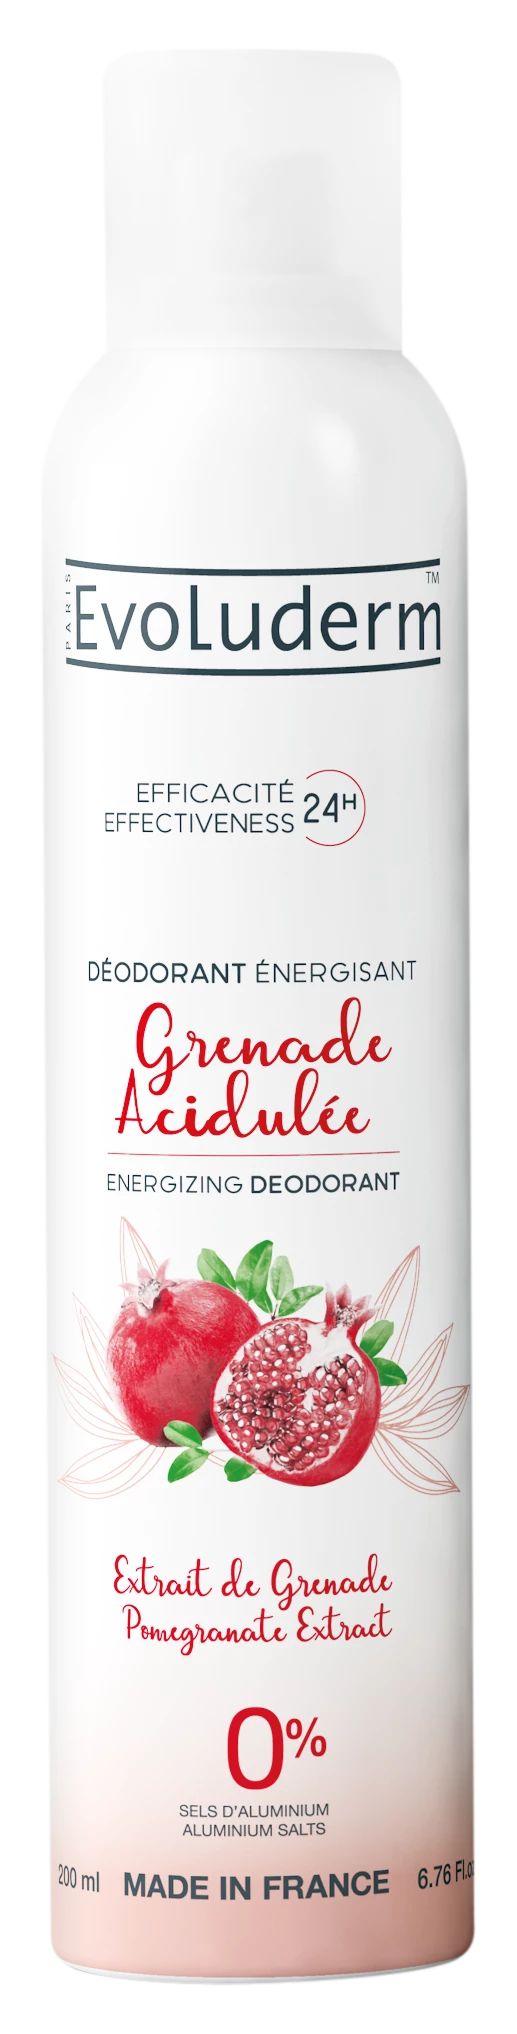 Acidulated Genade Deodorant Genade Extract, 200ml - EVOLUDERM